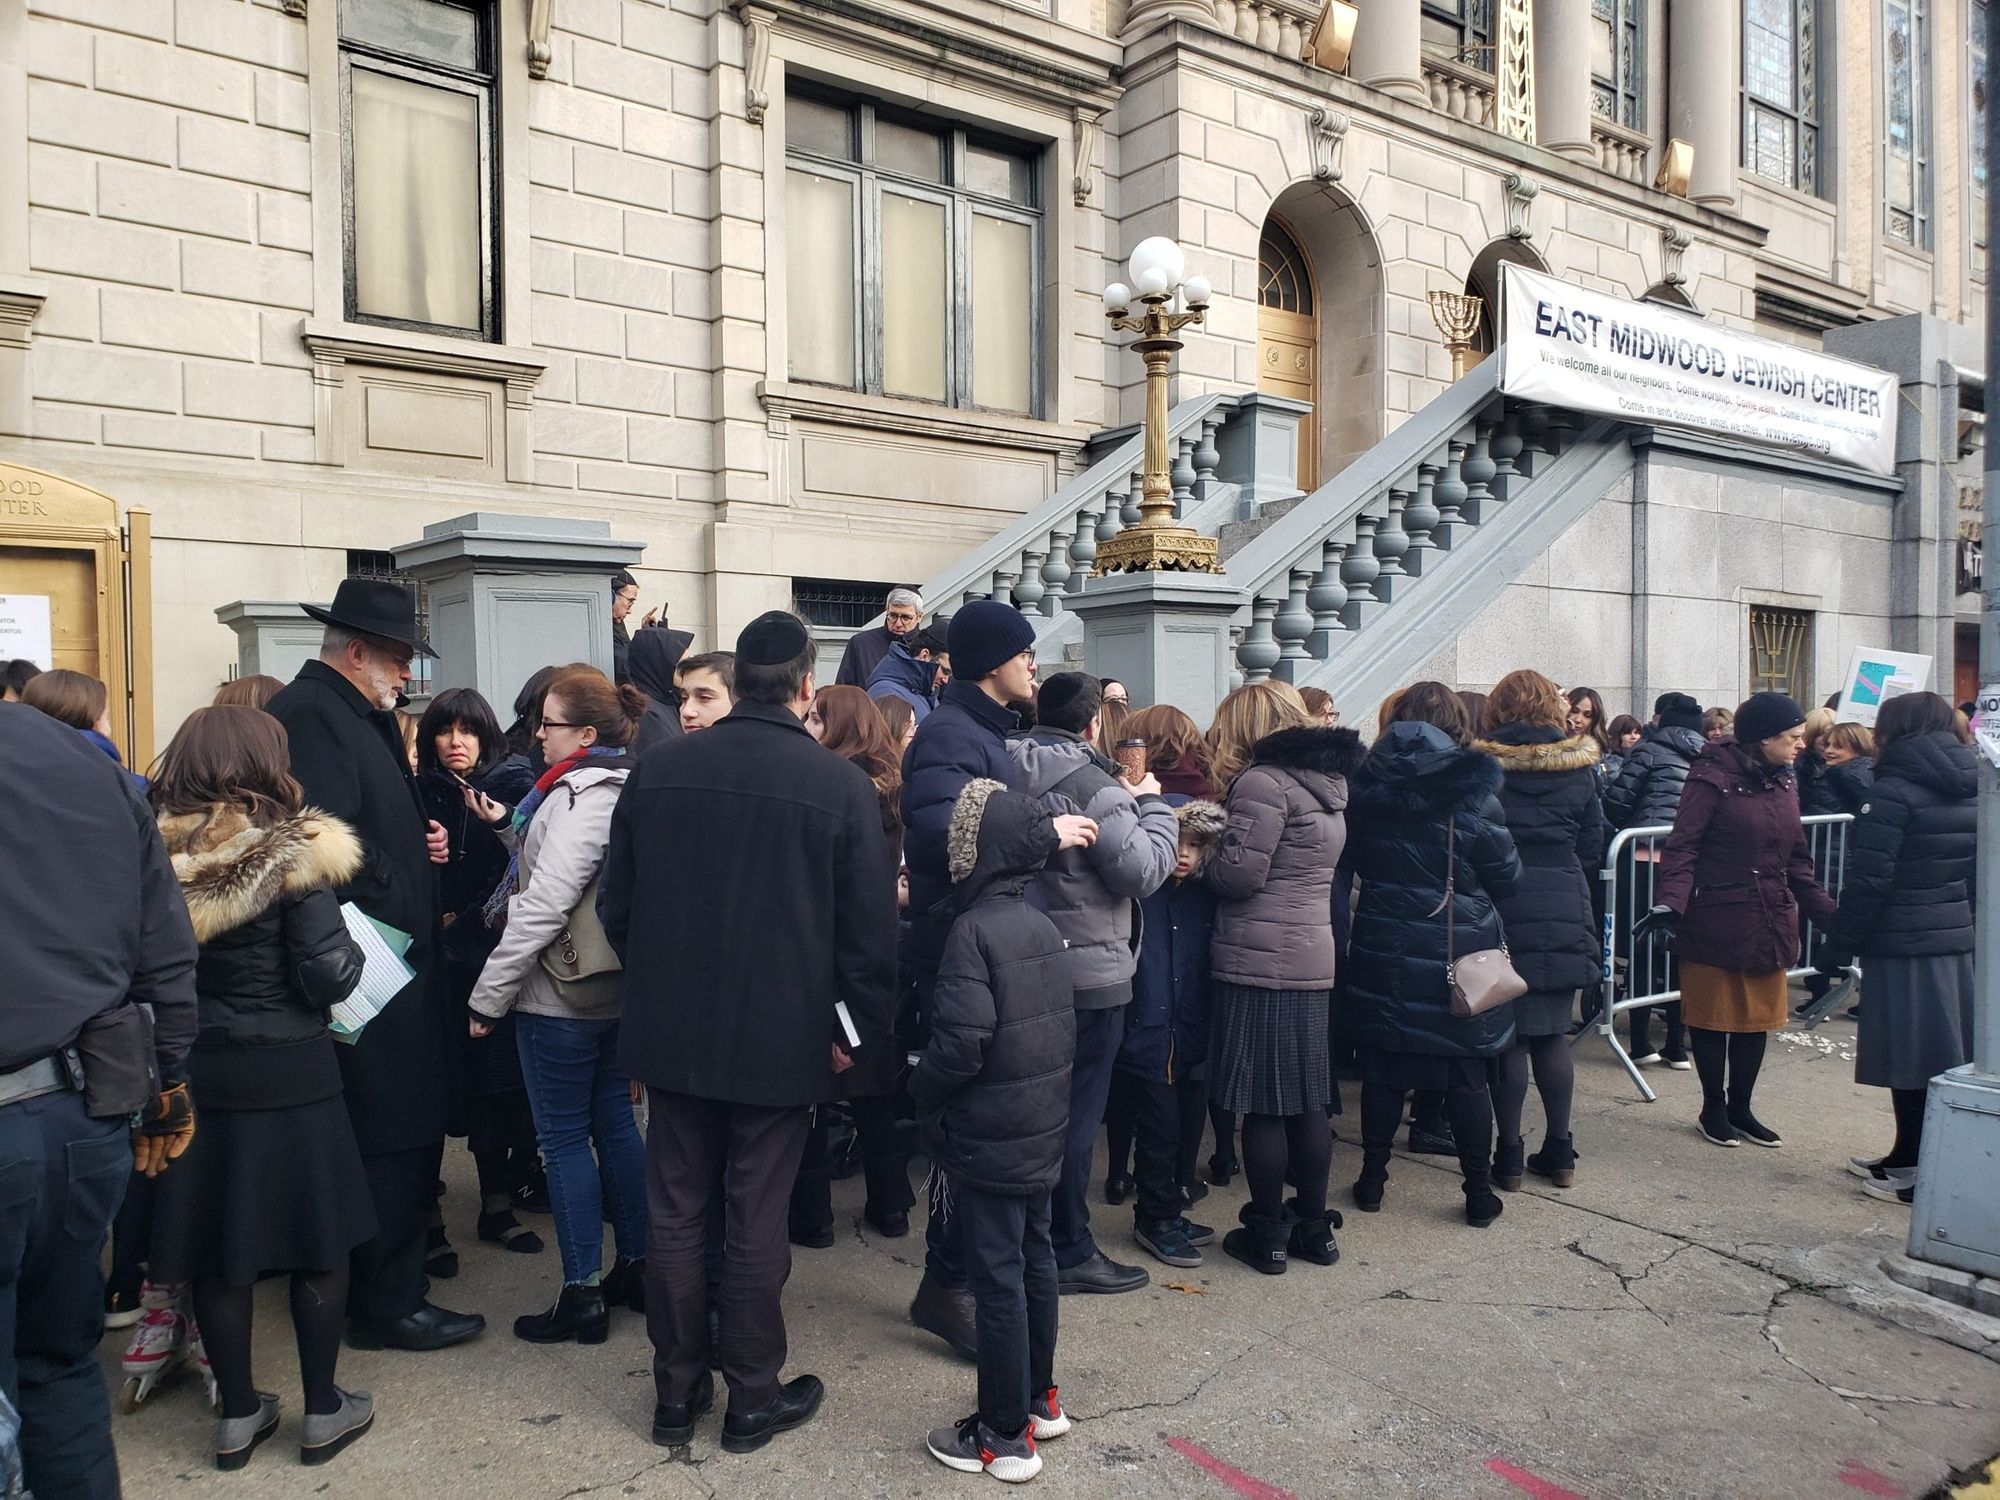 Jewish Neighbors Protest EMJC Rabbi’s Installation Over Charter School Controversy